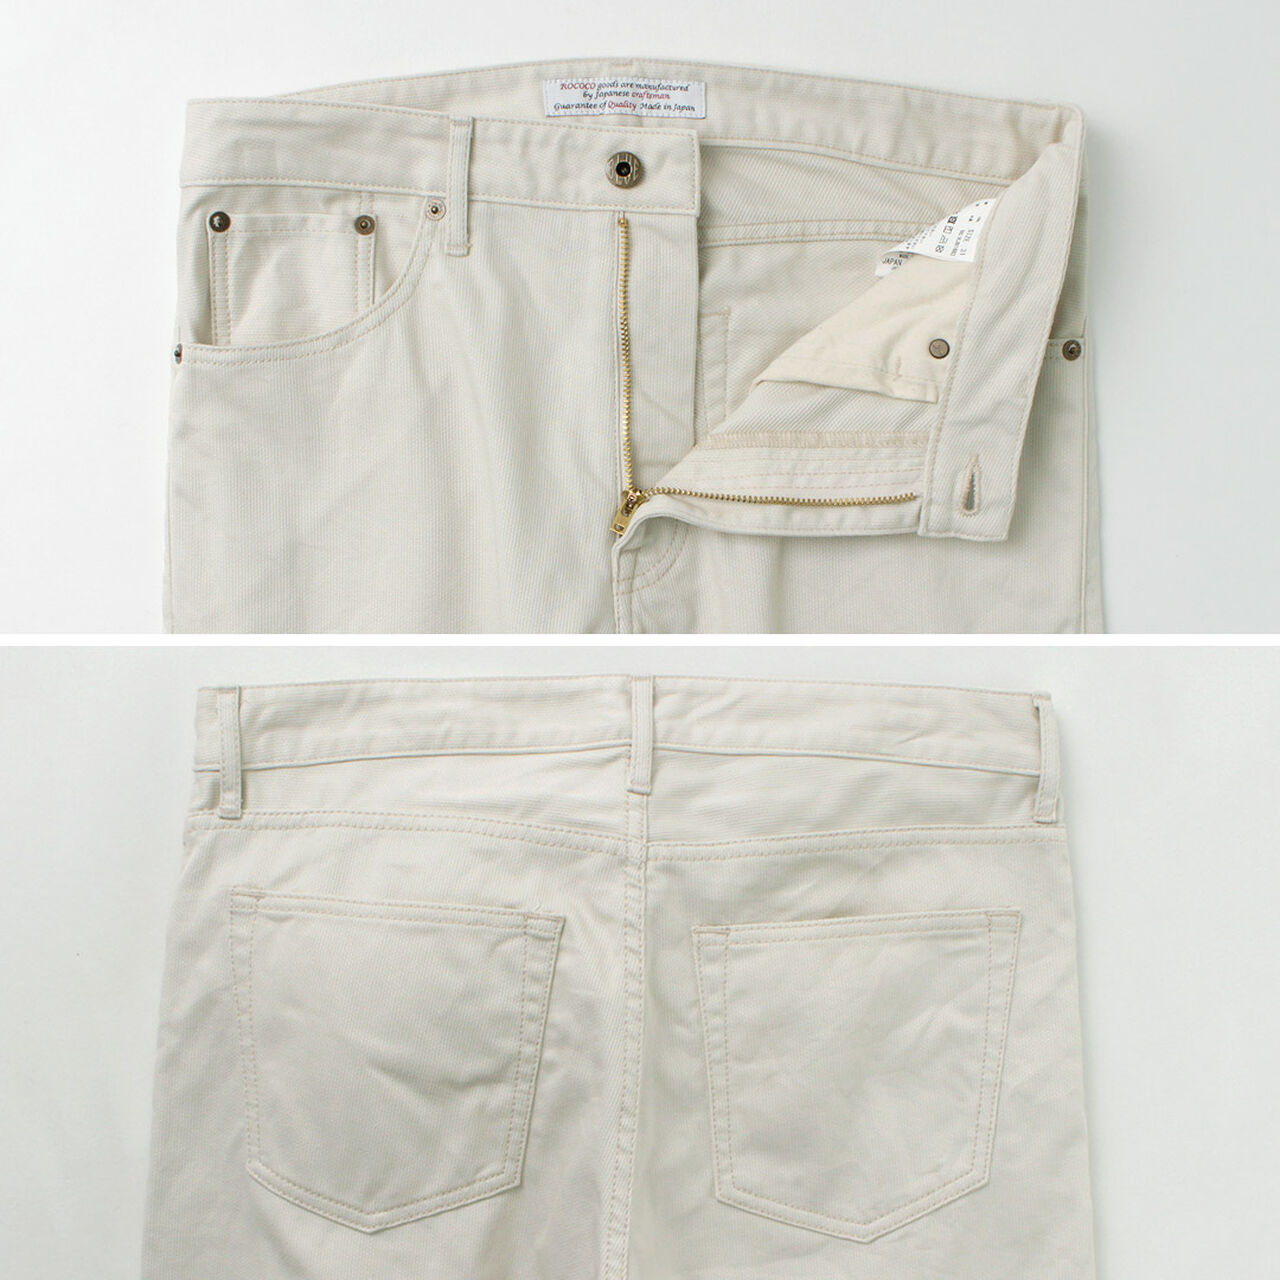 YAYUKATA LP1 Side Pocket Pants #japanesestreetfashion